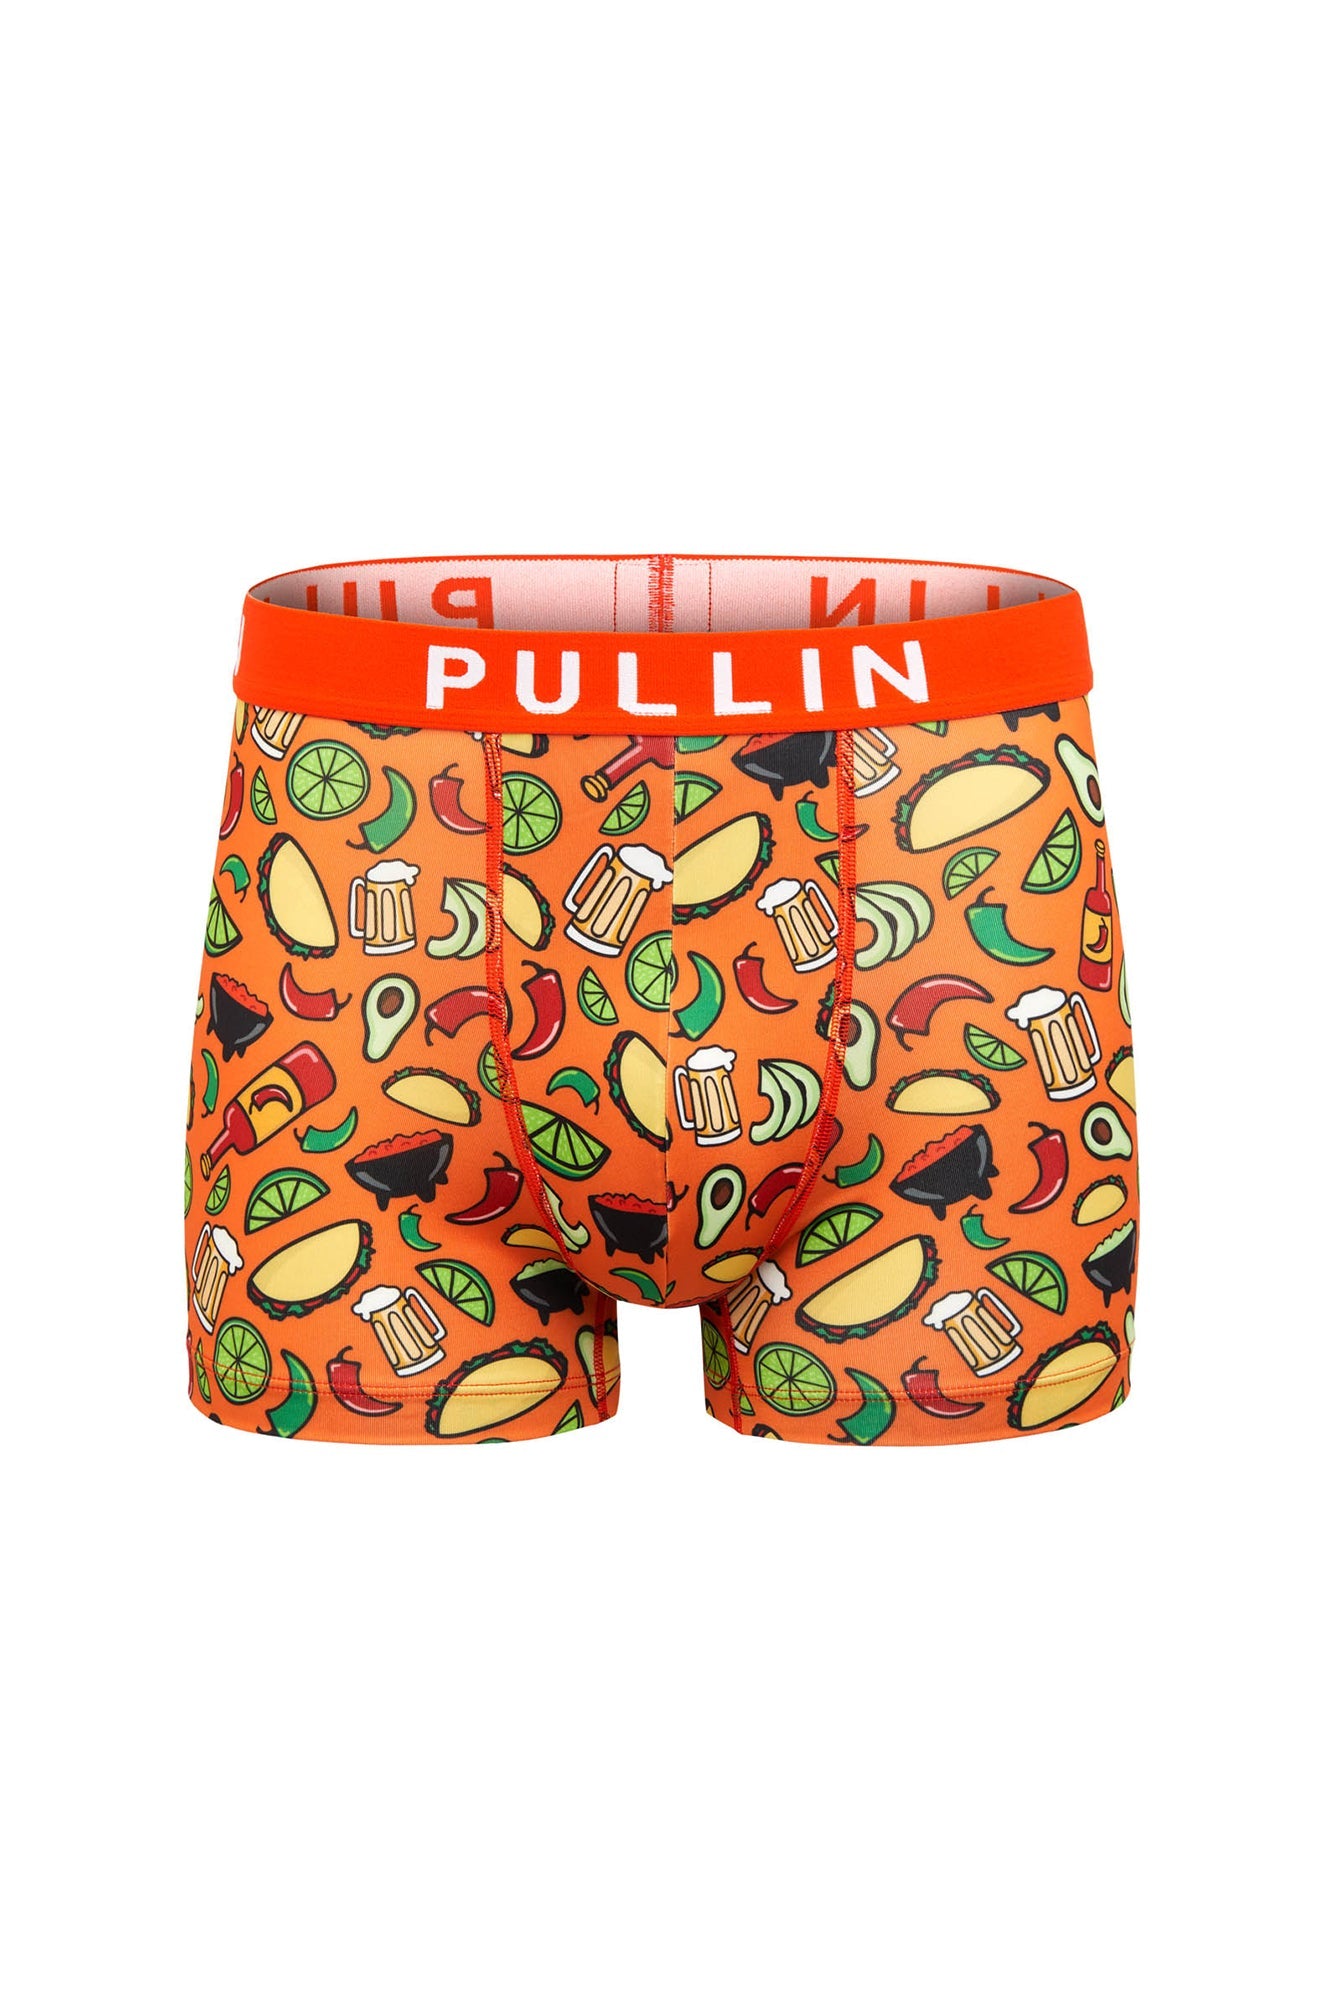 Men's underwear by Pullin, MAS TACOTIME